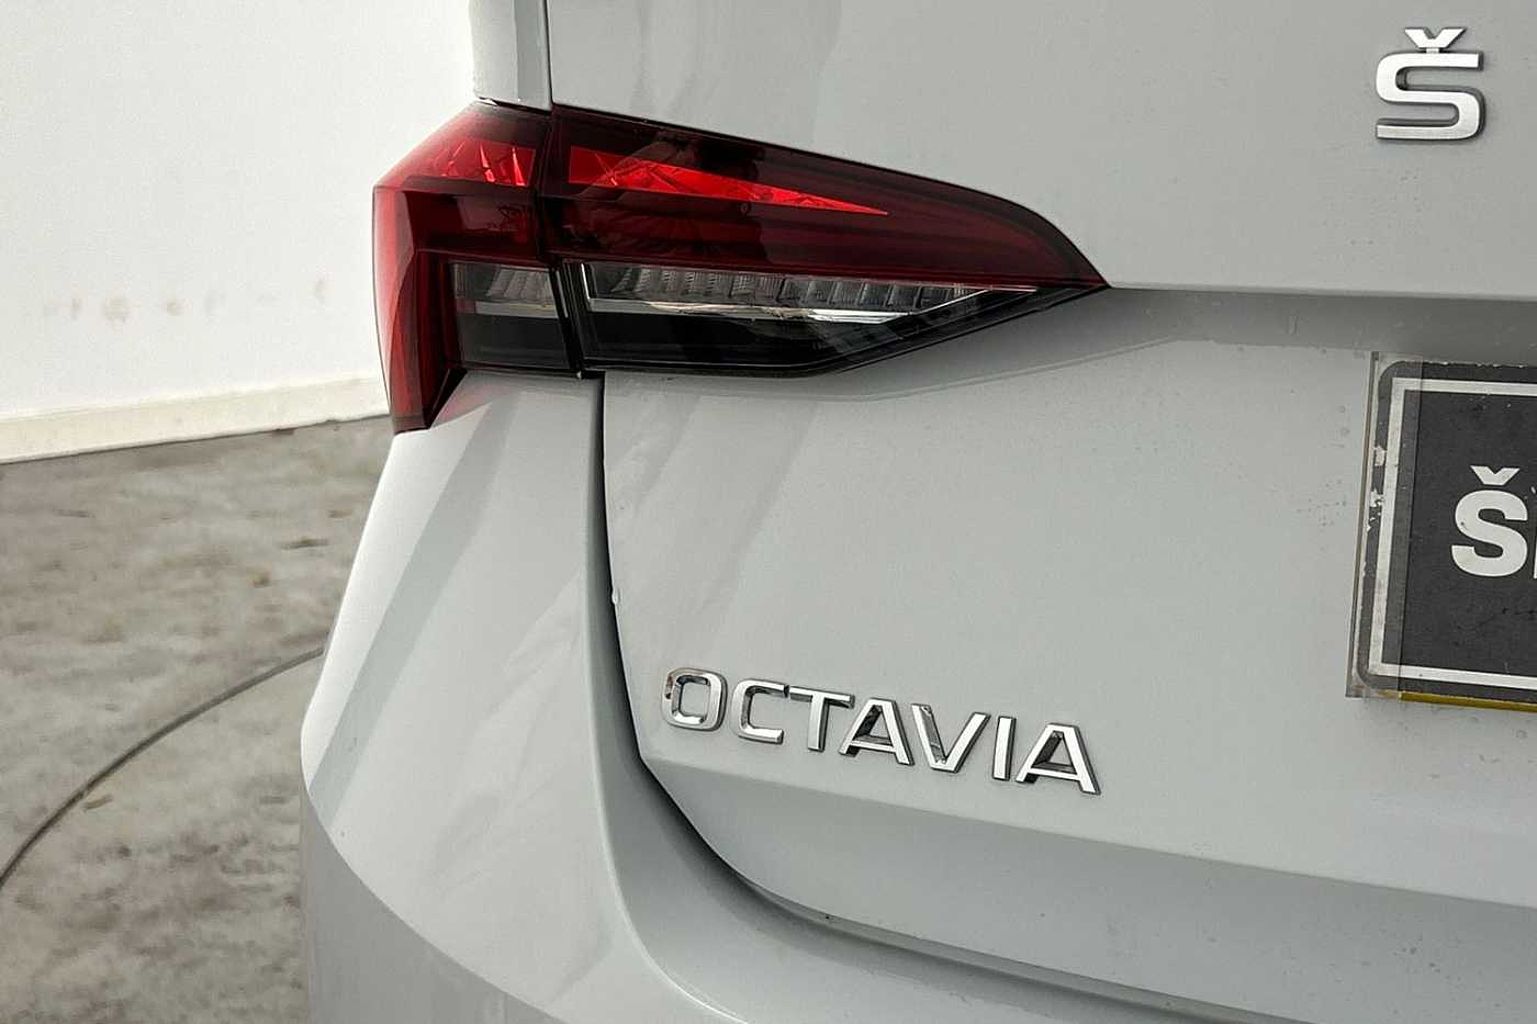 SKODA Octavia 1.0 TSI e-TEC (110ps) SE Technology Auto/DSG Hatchback